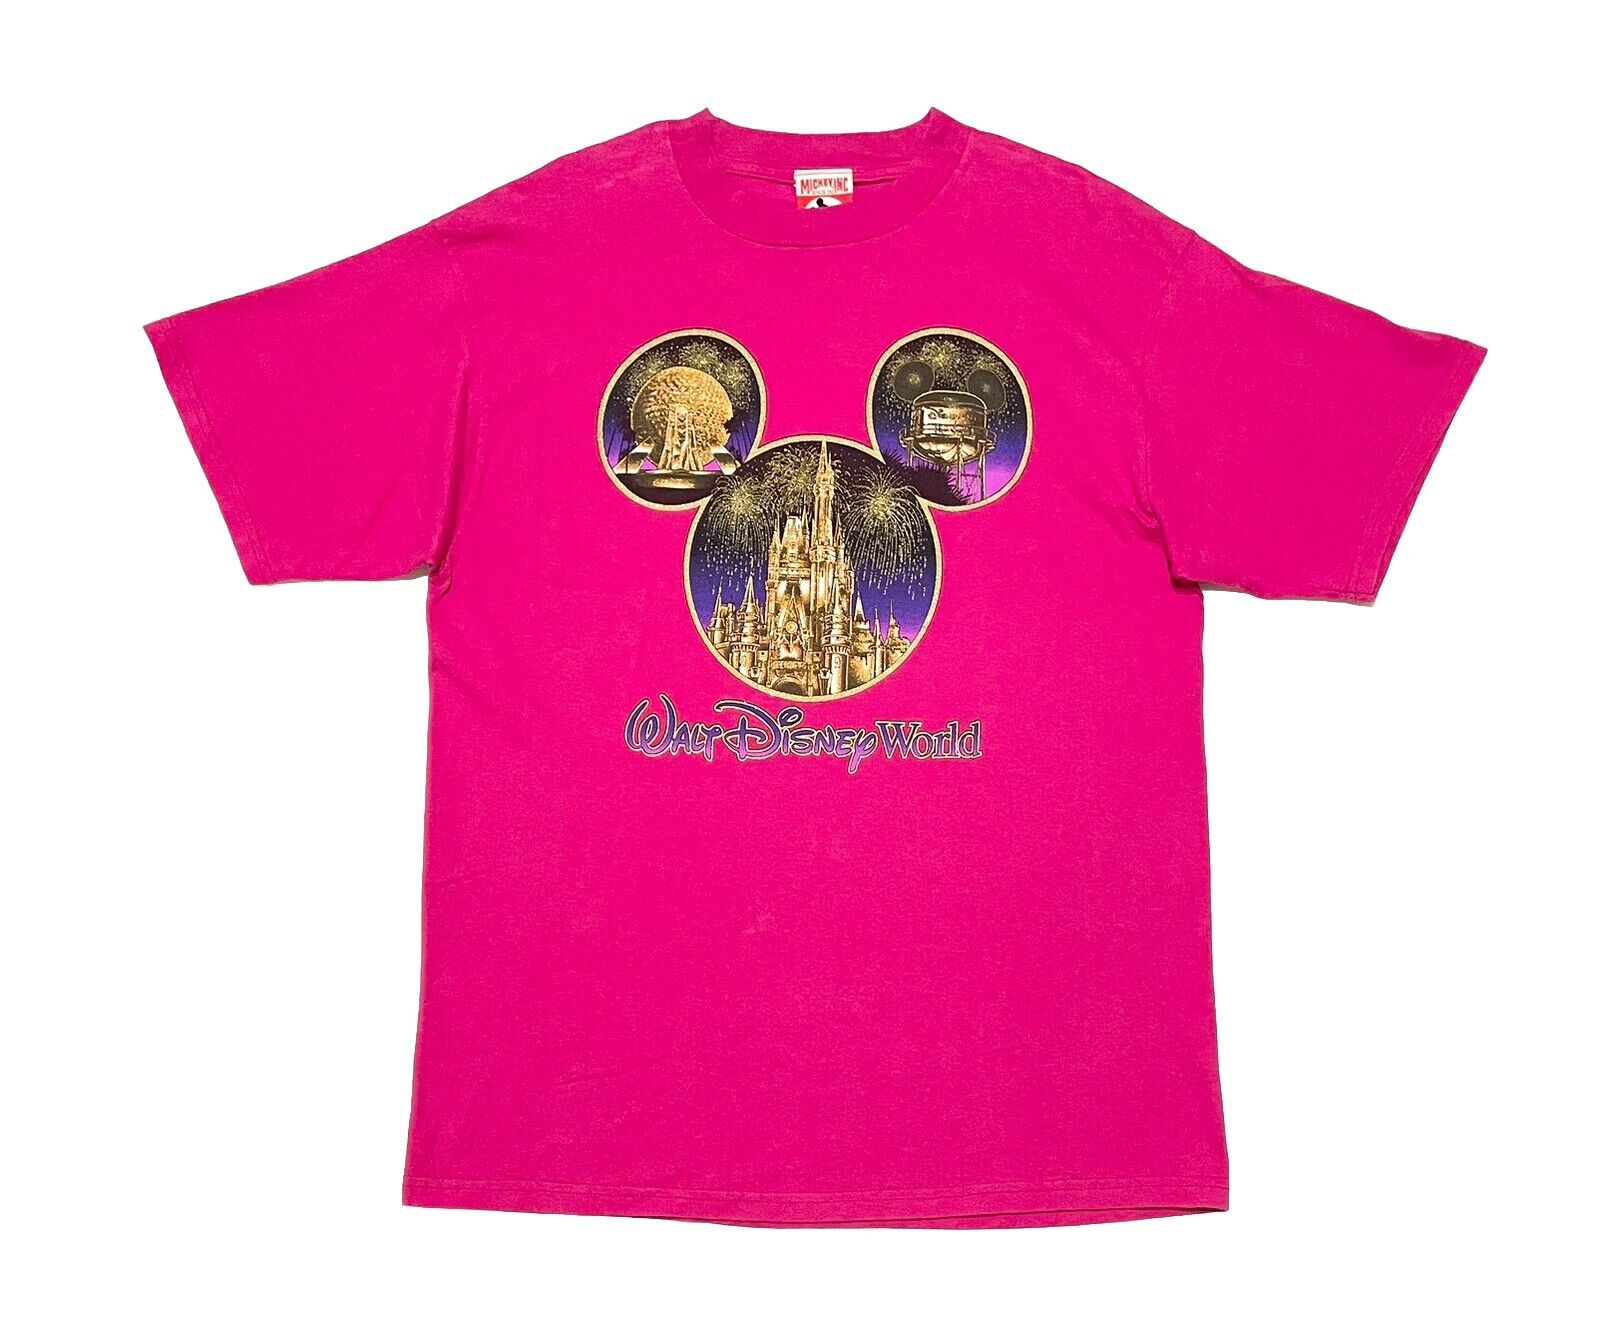 VTG Mickey Inc. Walt Disney World T-shirt Women's XL Magenta Pink Glitter USA